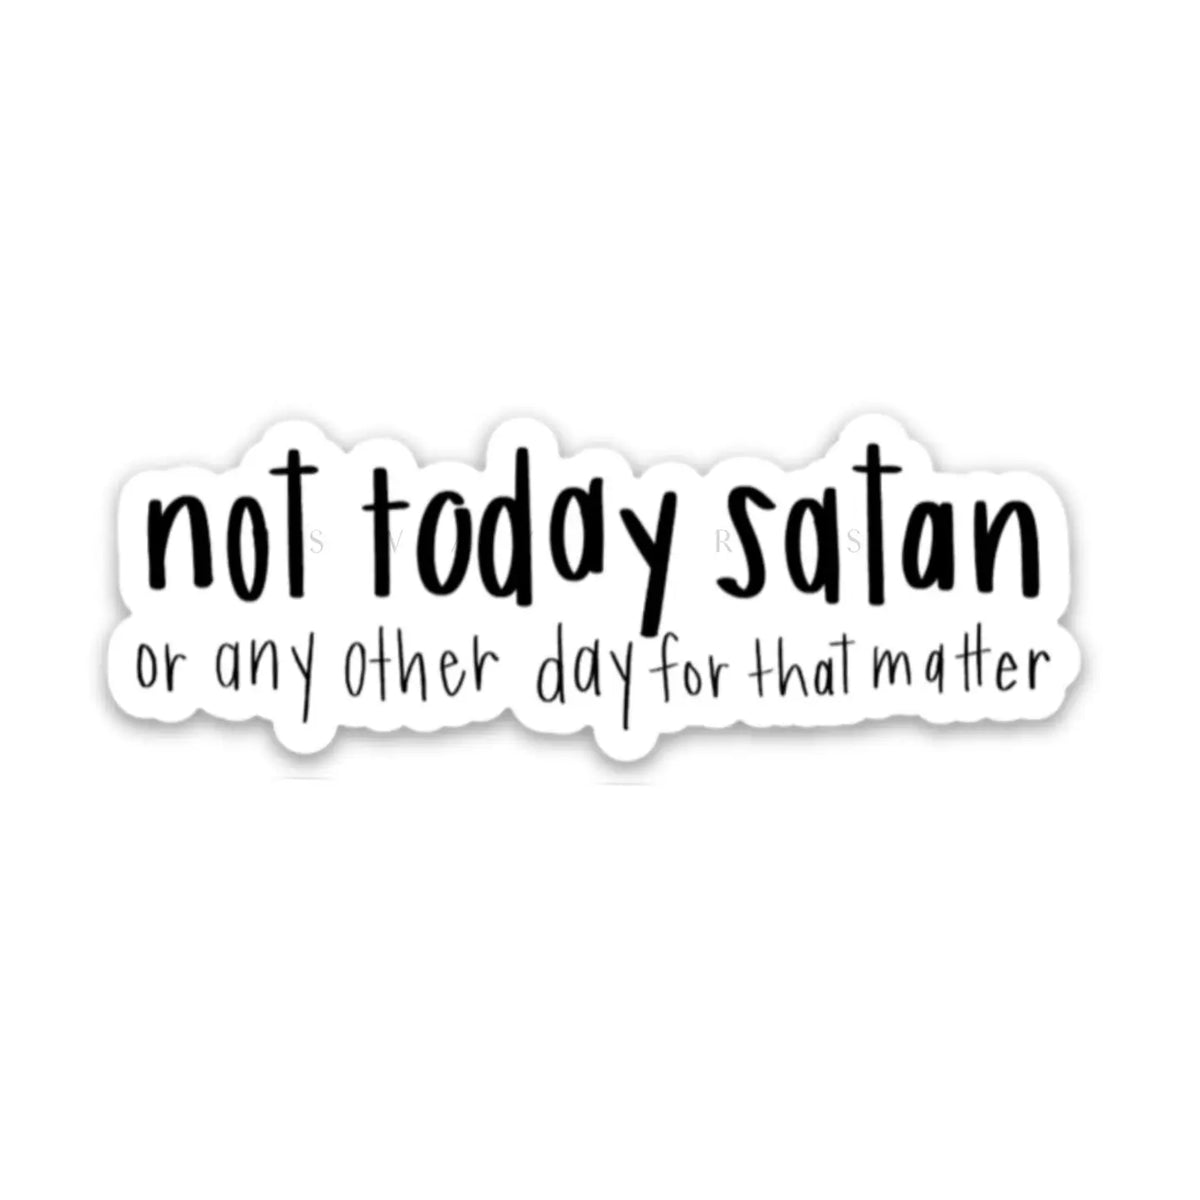 Not Today Satan Sticker | Faith Stickers & Decals